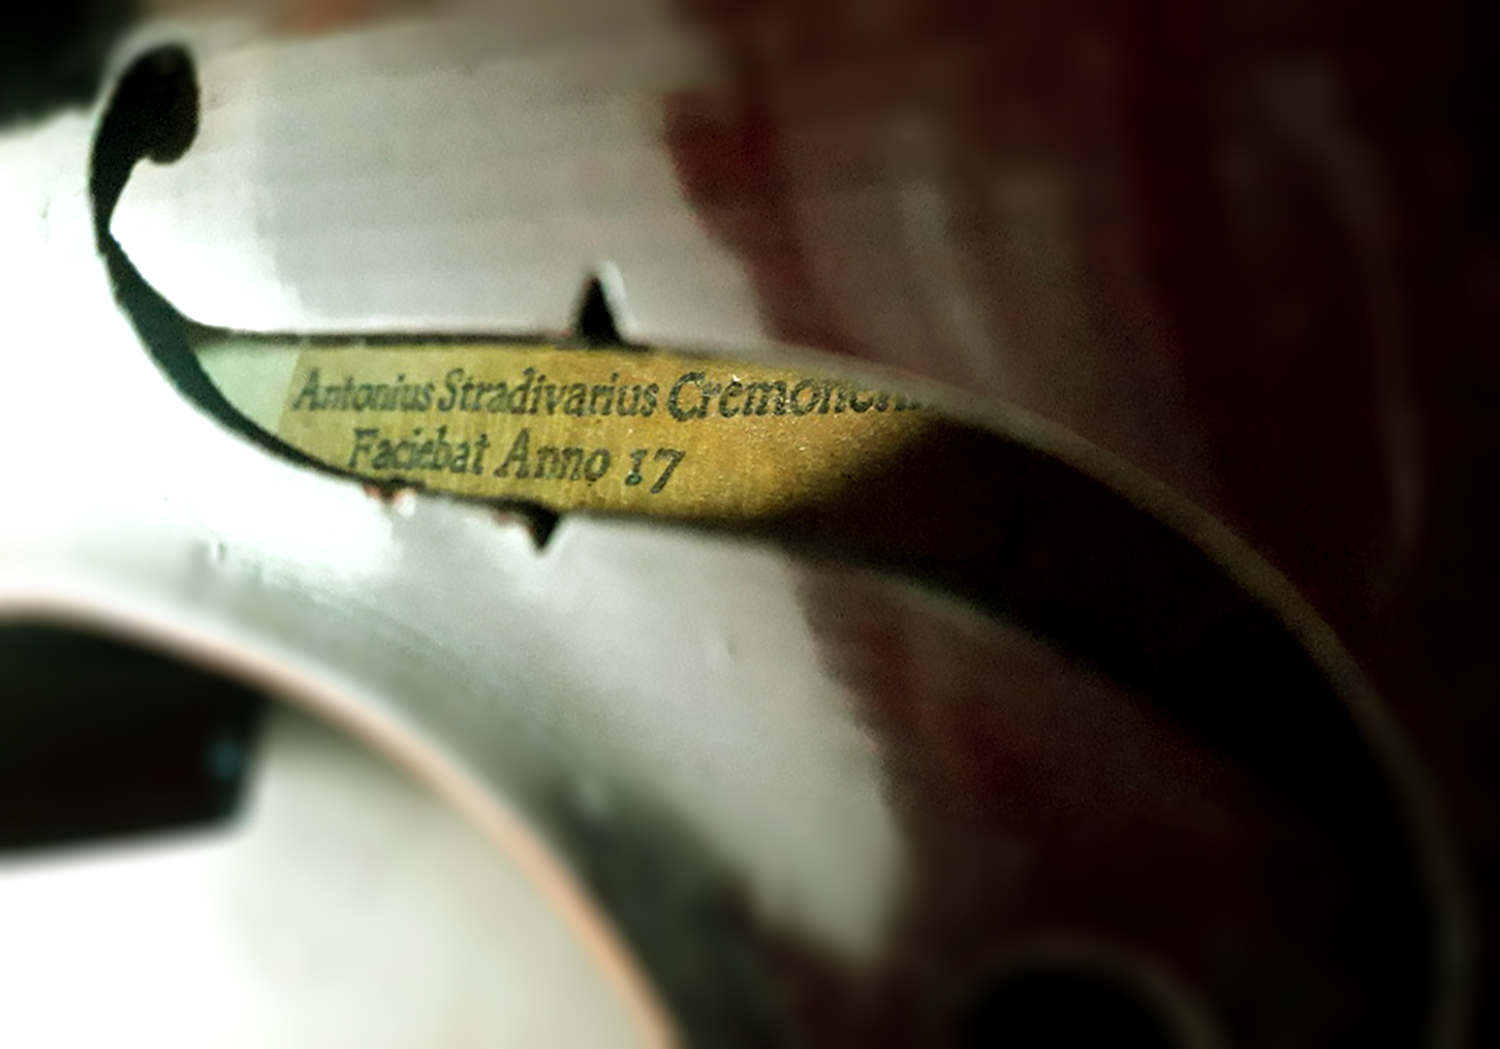 Fake strad violin label inside a violin f-hole